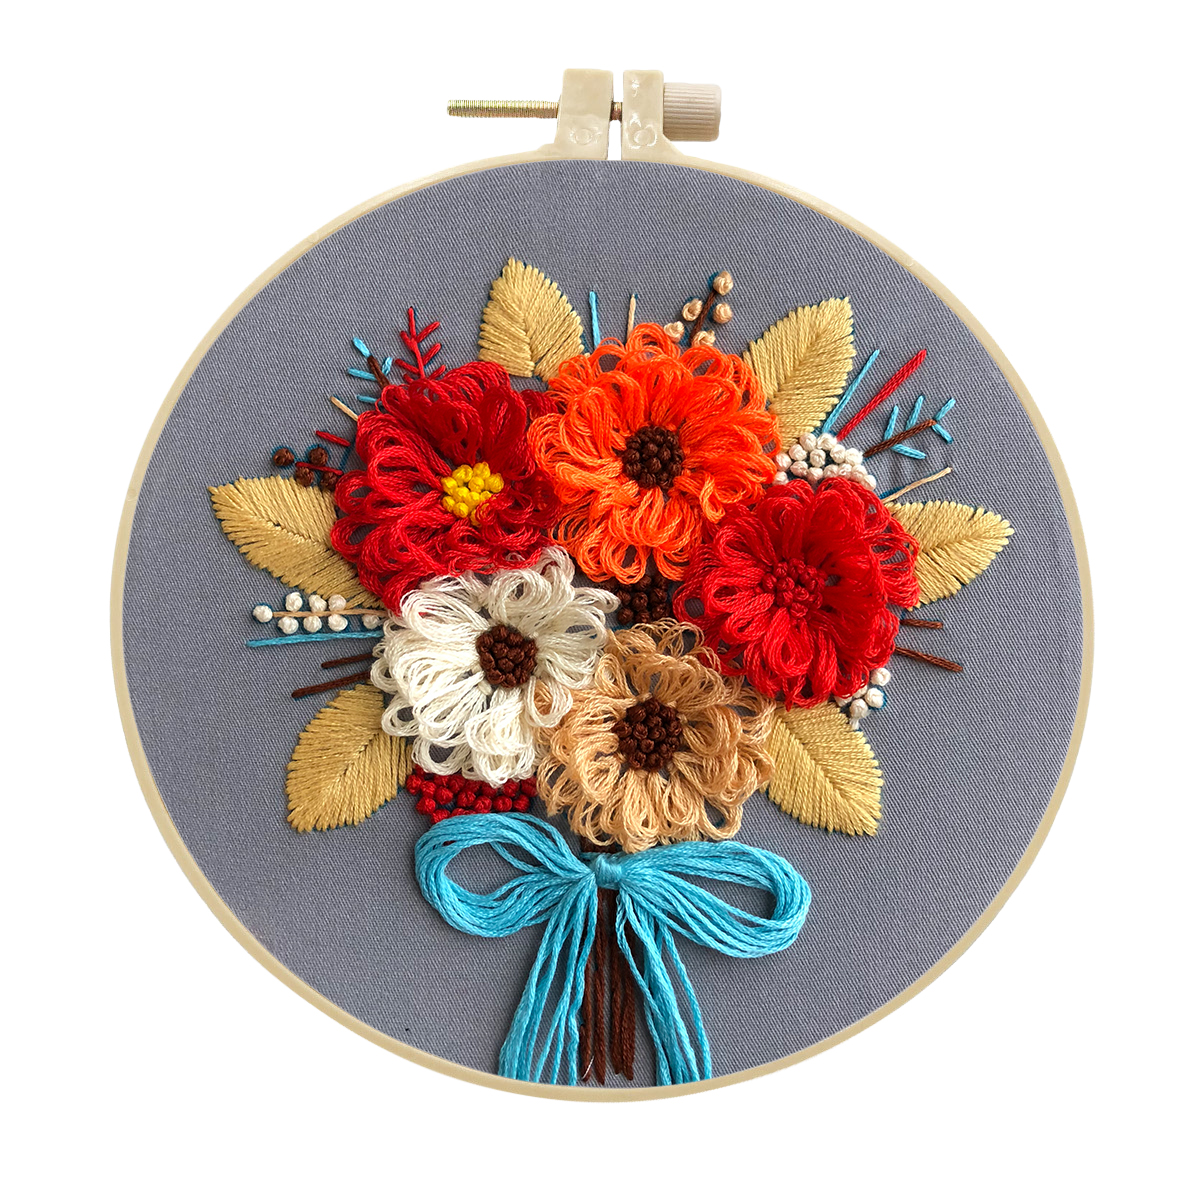 DIY Handmade Embroidery Kit Craft Cross Stitch Kits Beginner - Beautiful Bouquet Pattern